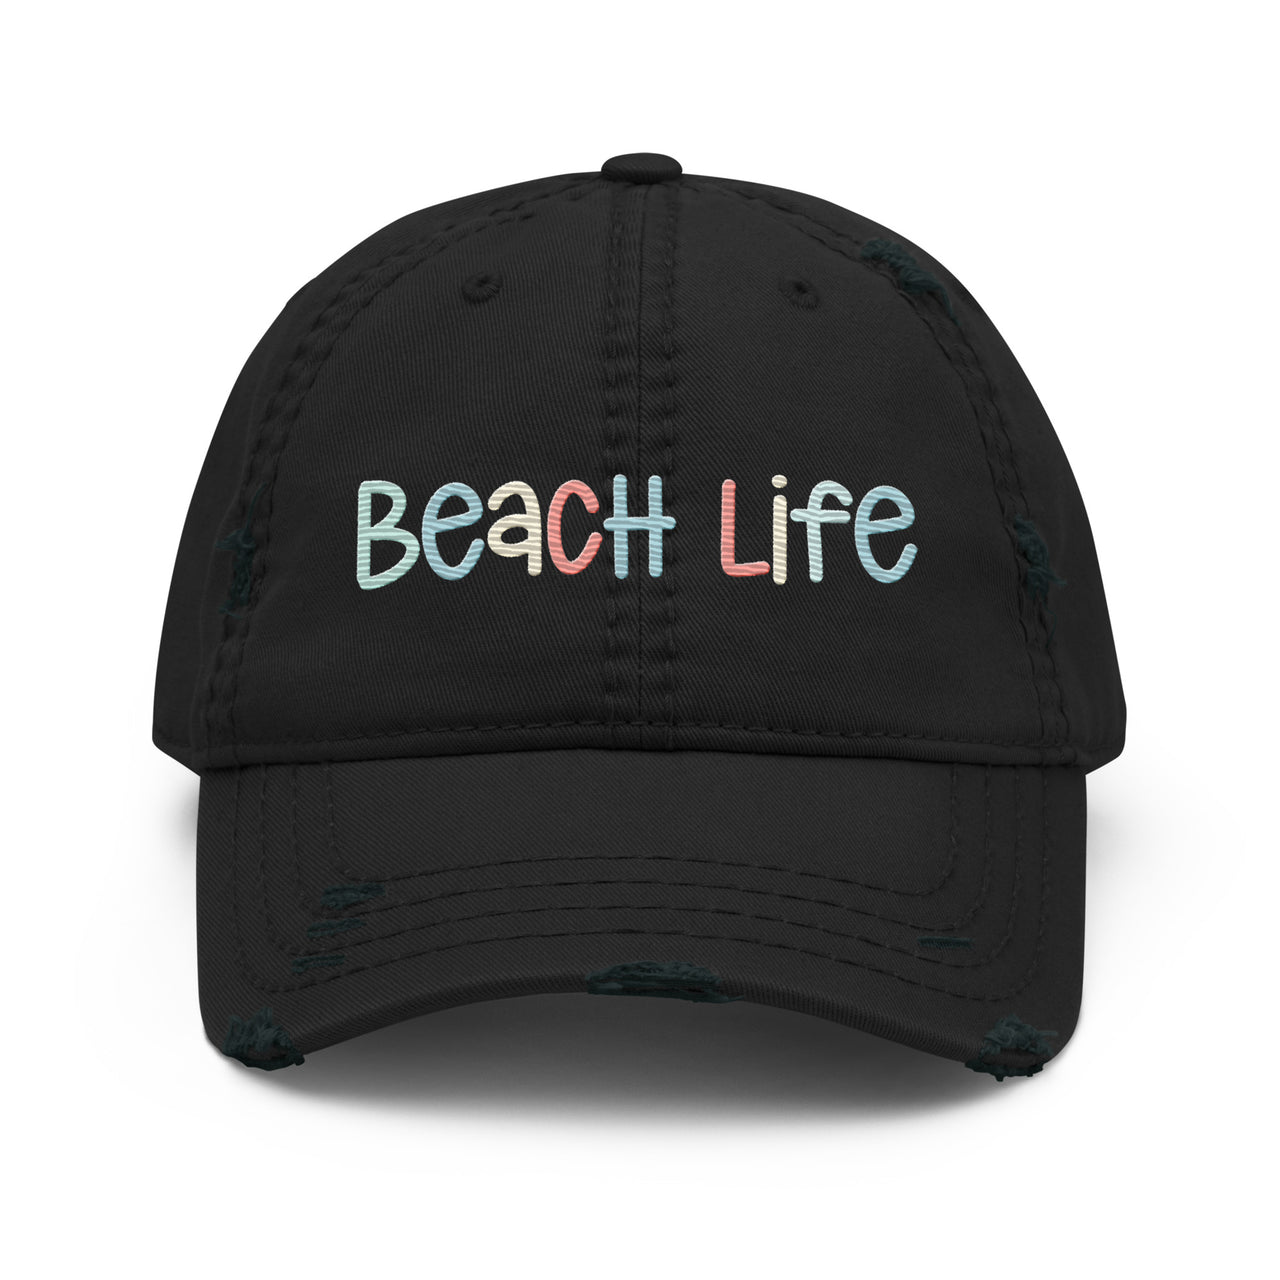 Beach Life Distressed Hat, Baseball Cap  New England Trading Co Black  